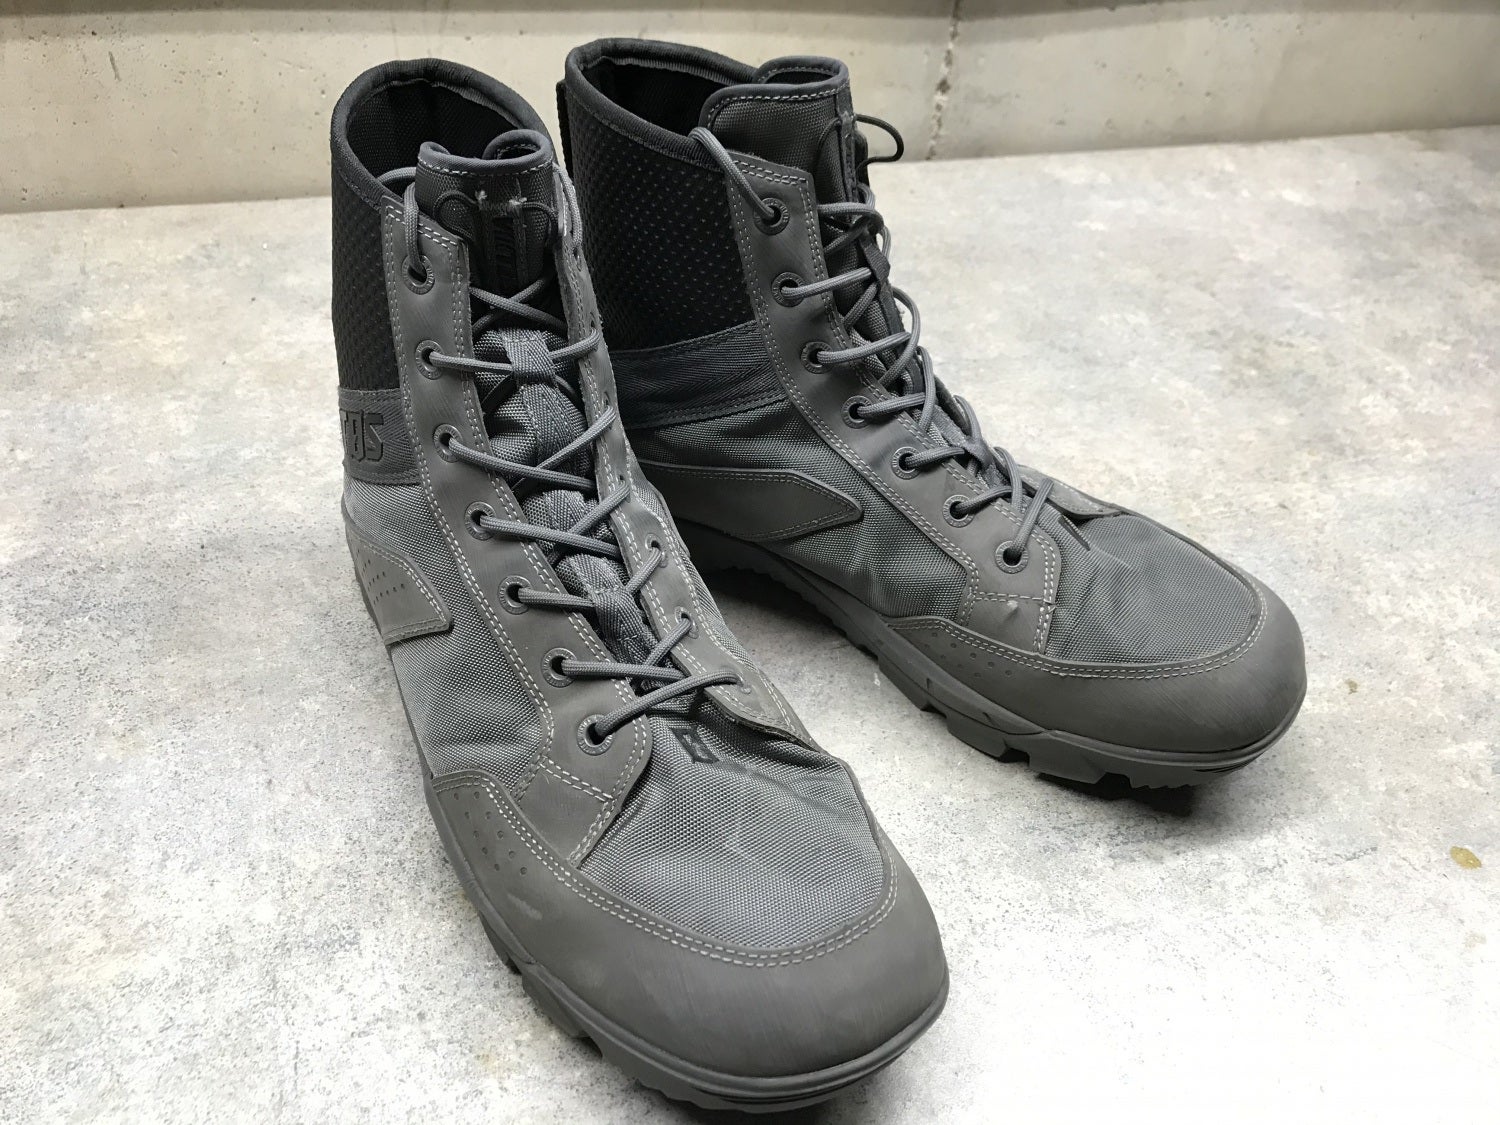 viktos johnny combat boots review